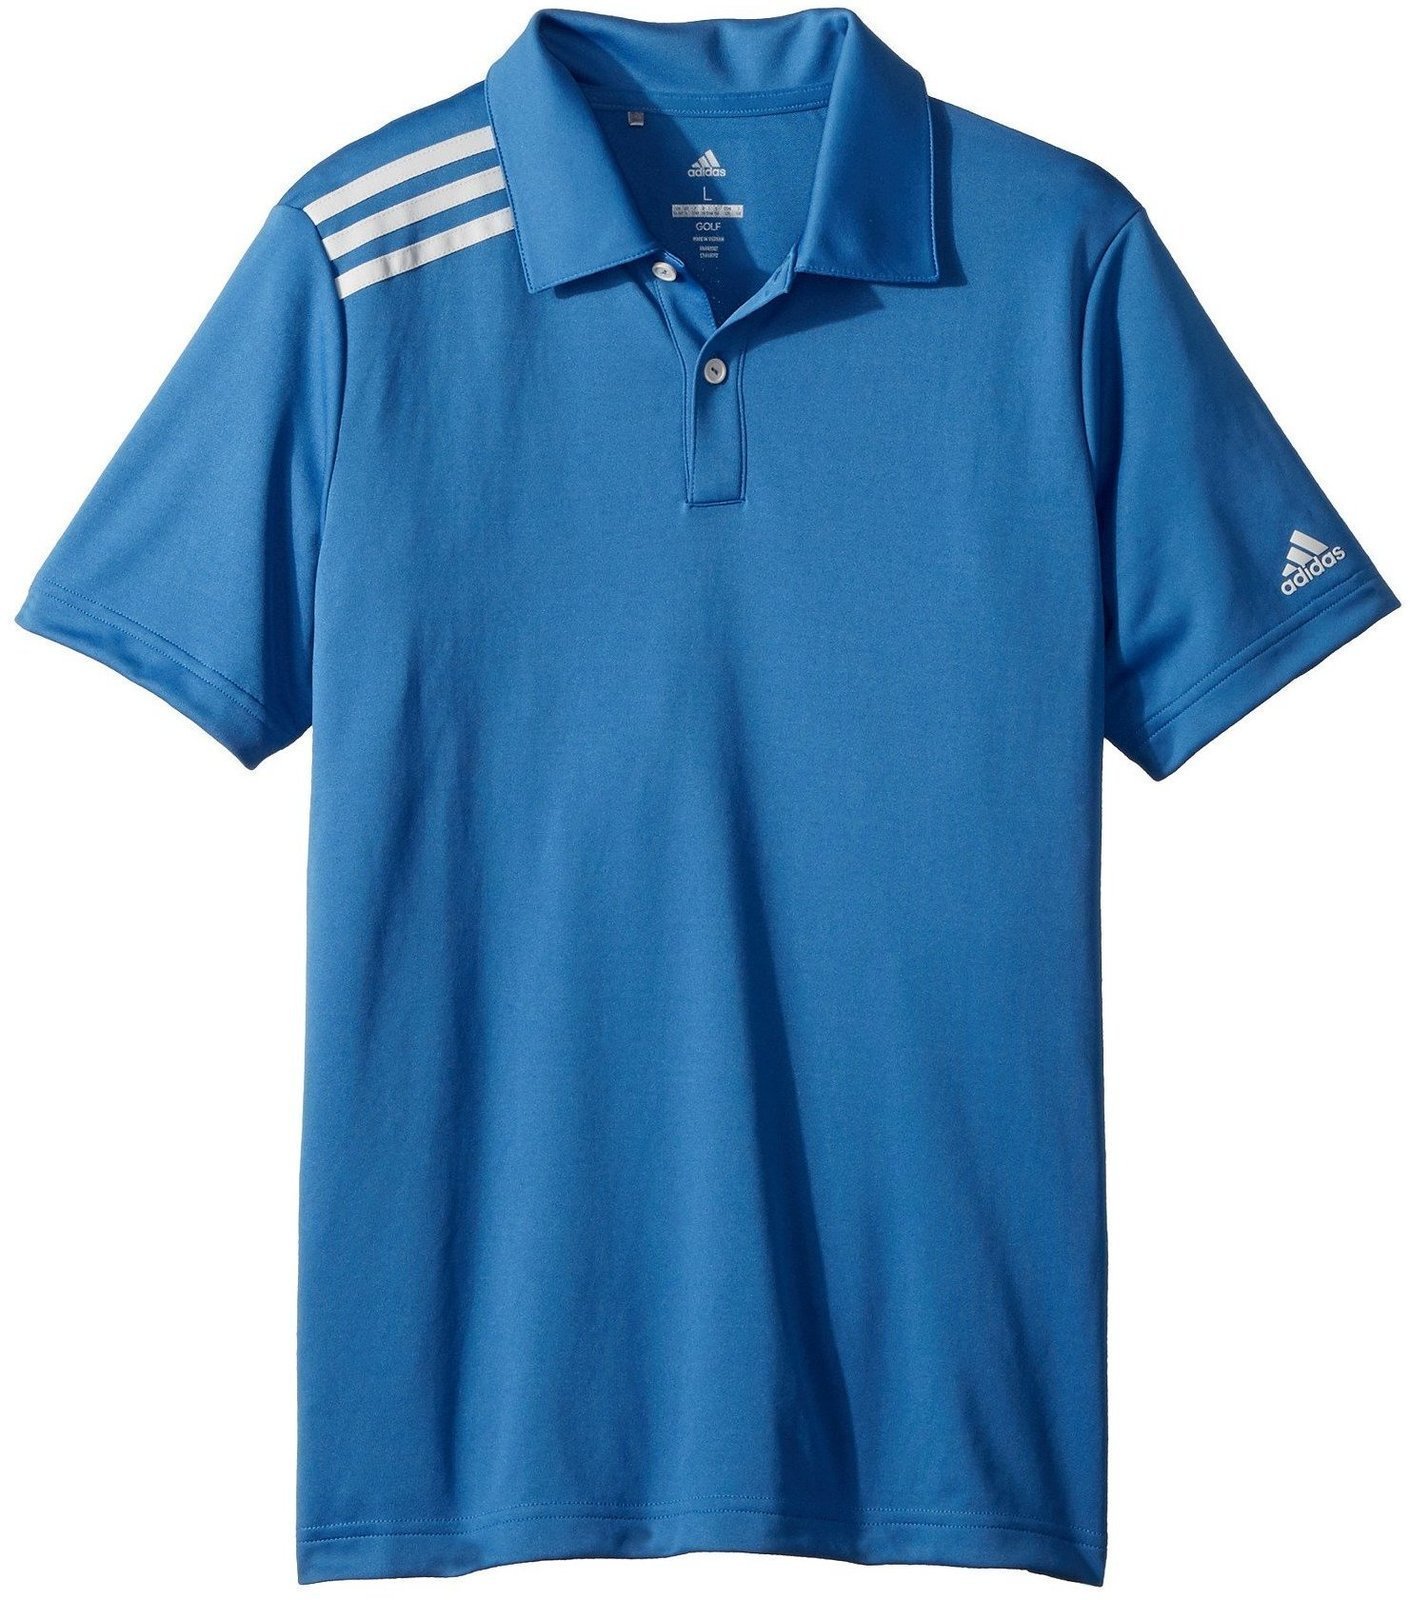 Polo majica Adidas 3-Stripes Tournament Trace Royal 13 - 14 godina